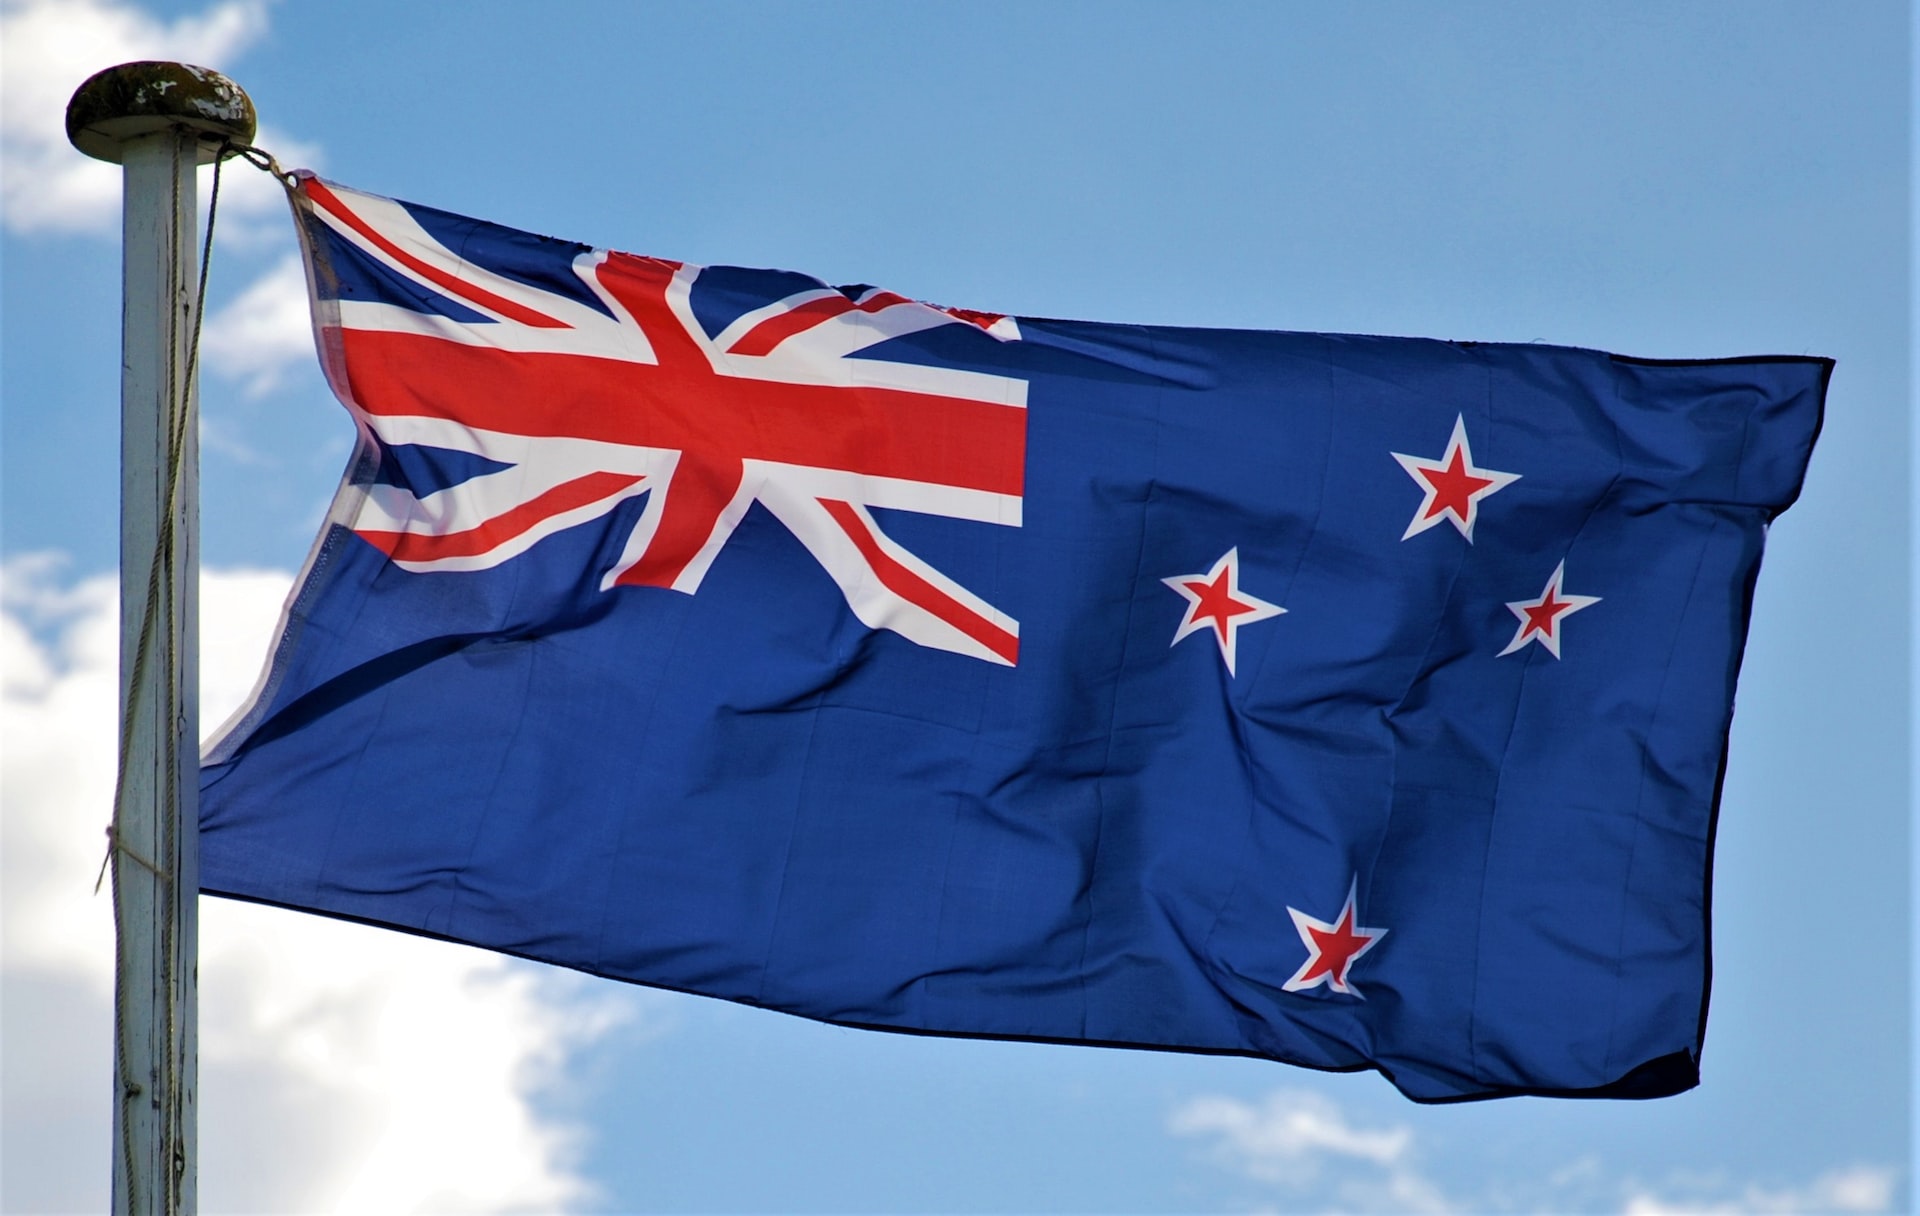 NZ_flag_kerin-gedge-yzIpBt-1t5g-unsplash